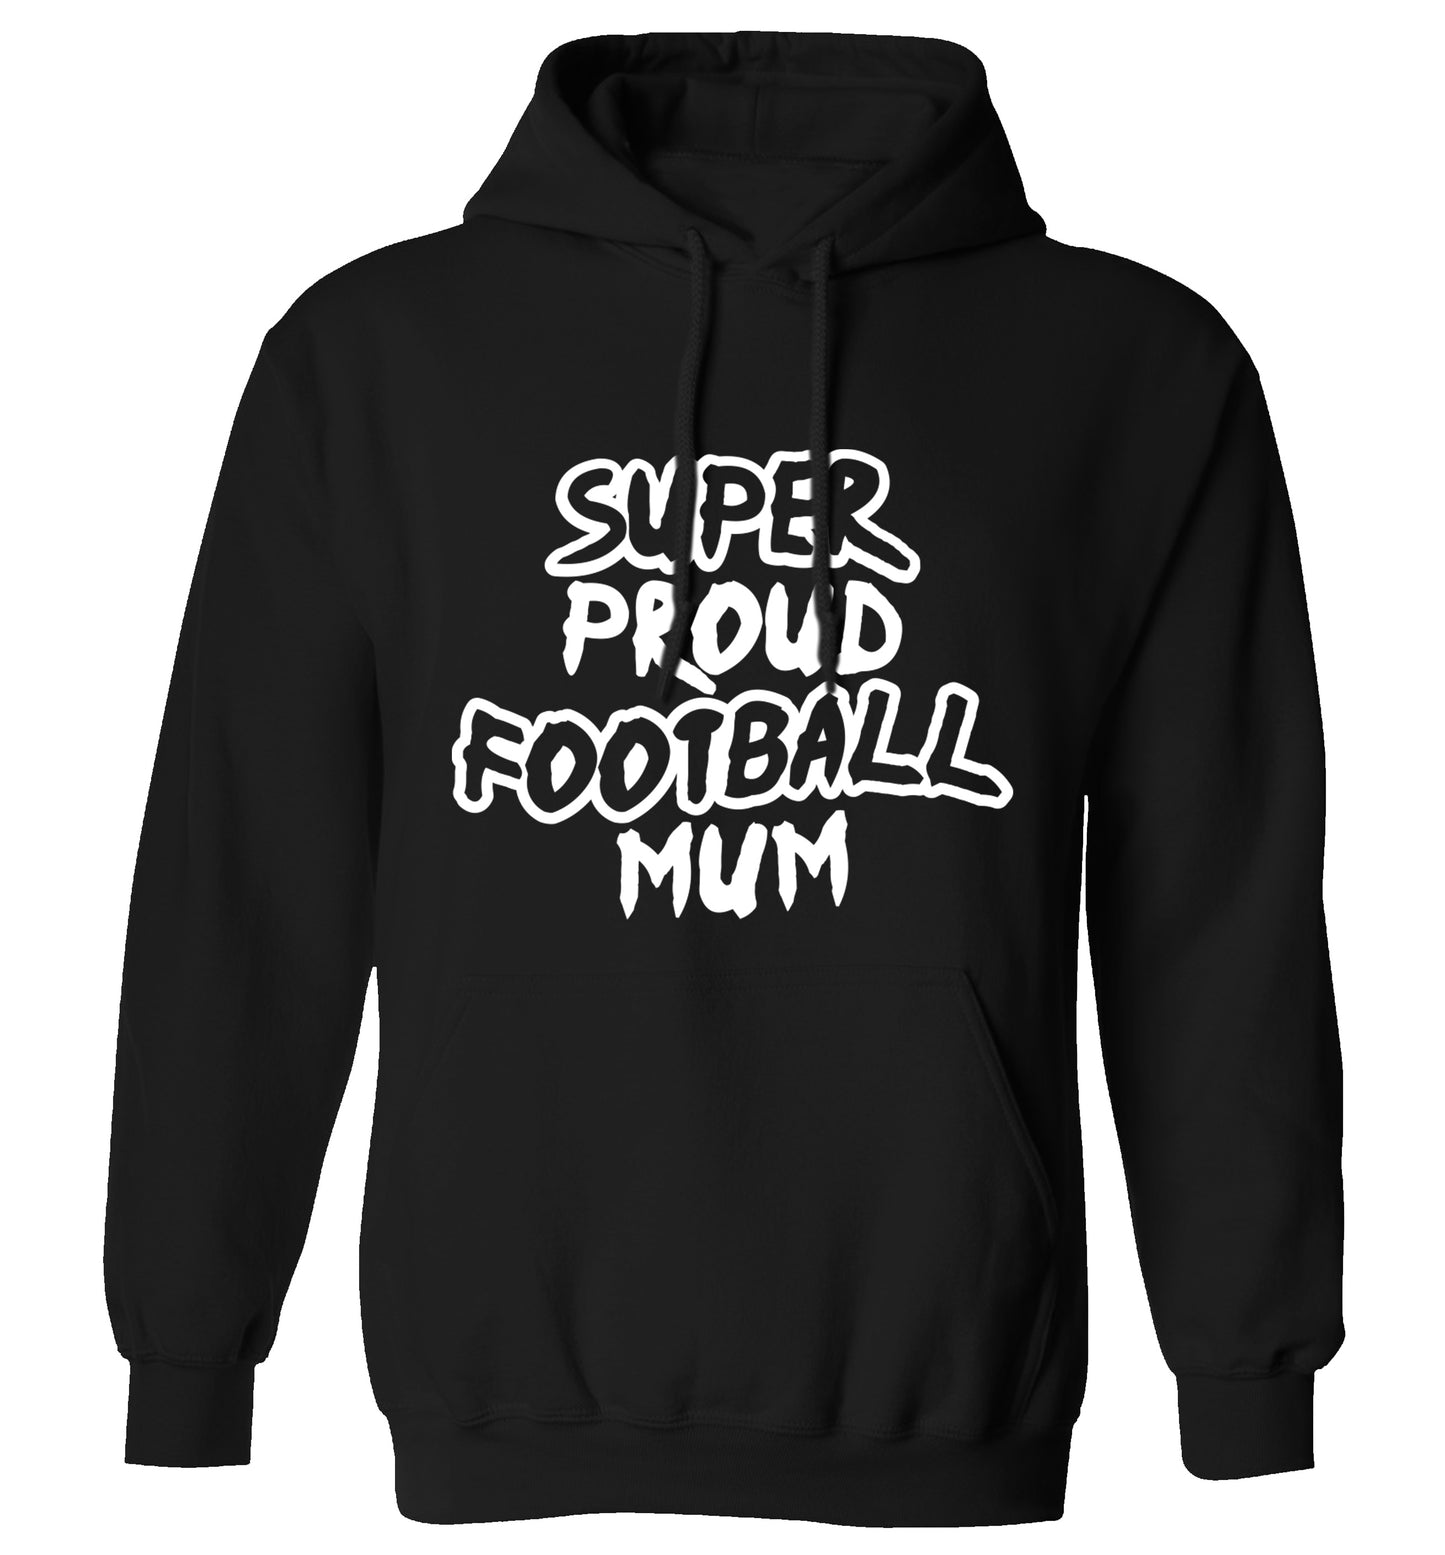 Super proud football mum adults unisexblack hoodie 2XL